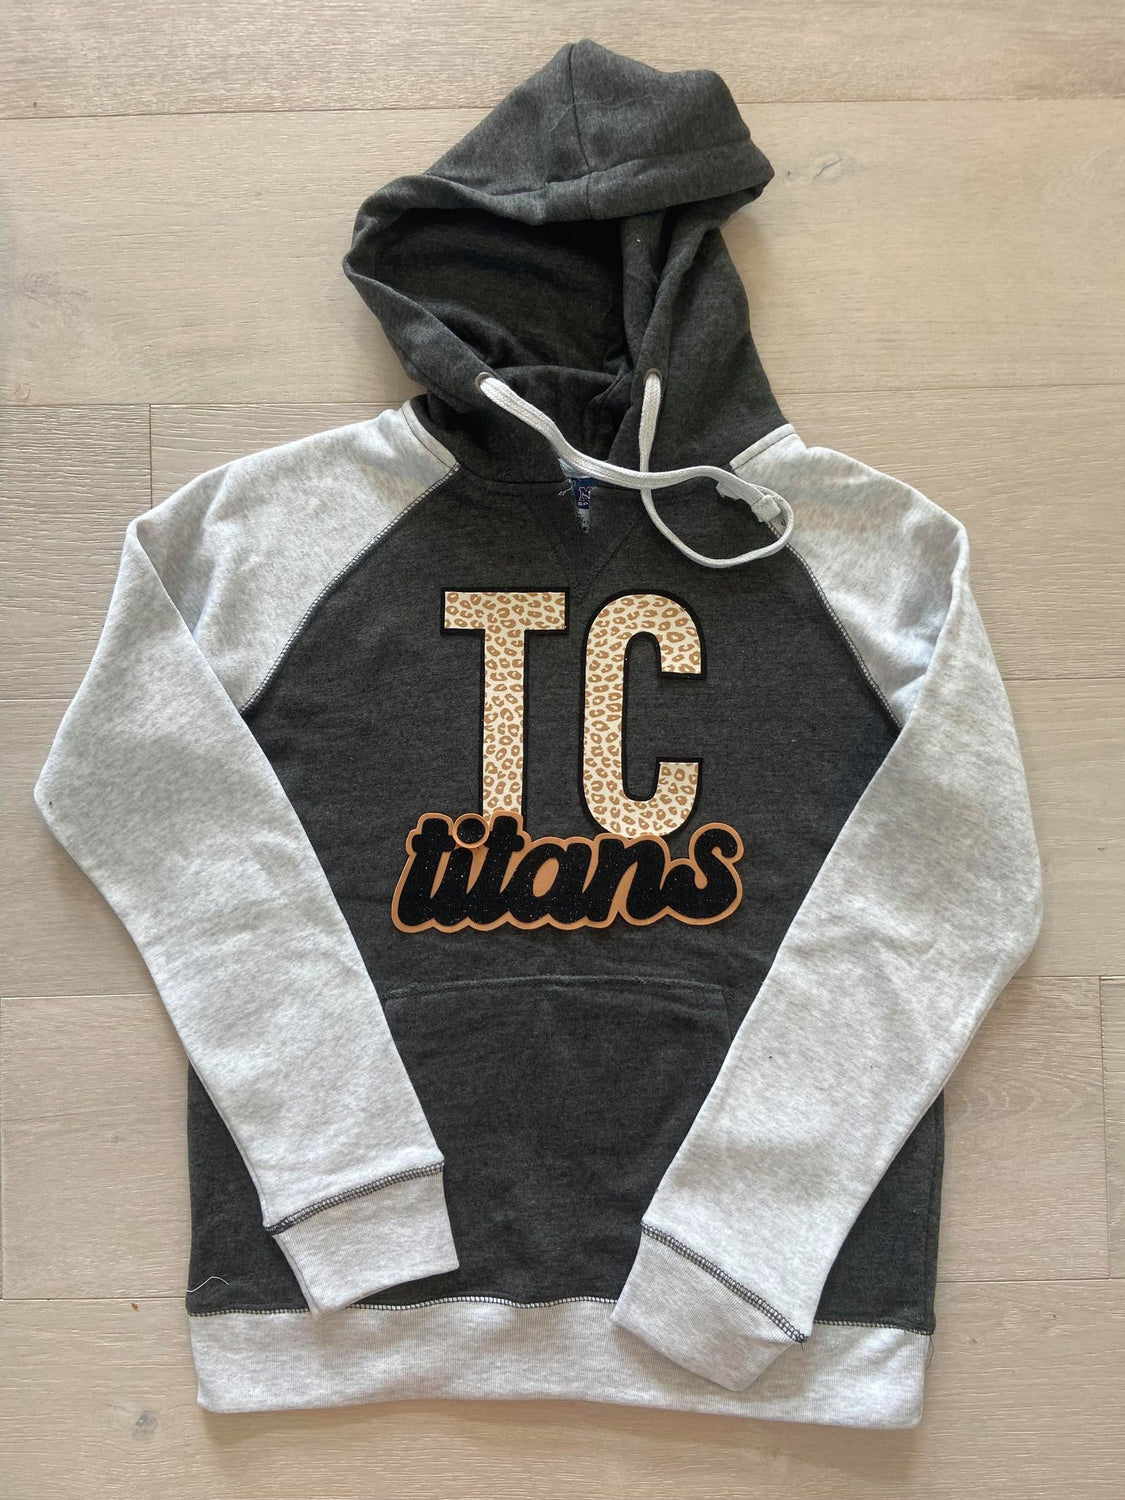 TC TITANS - COLORBLOCK HOODIE